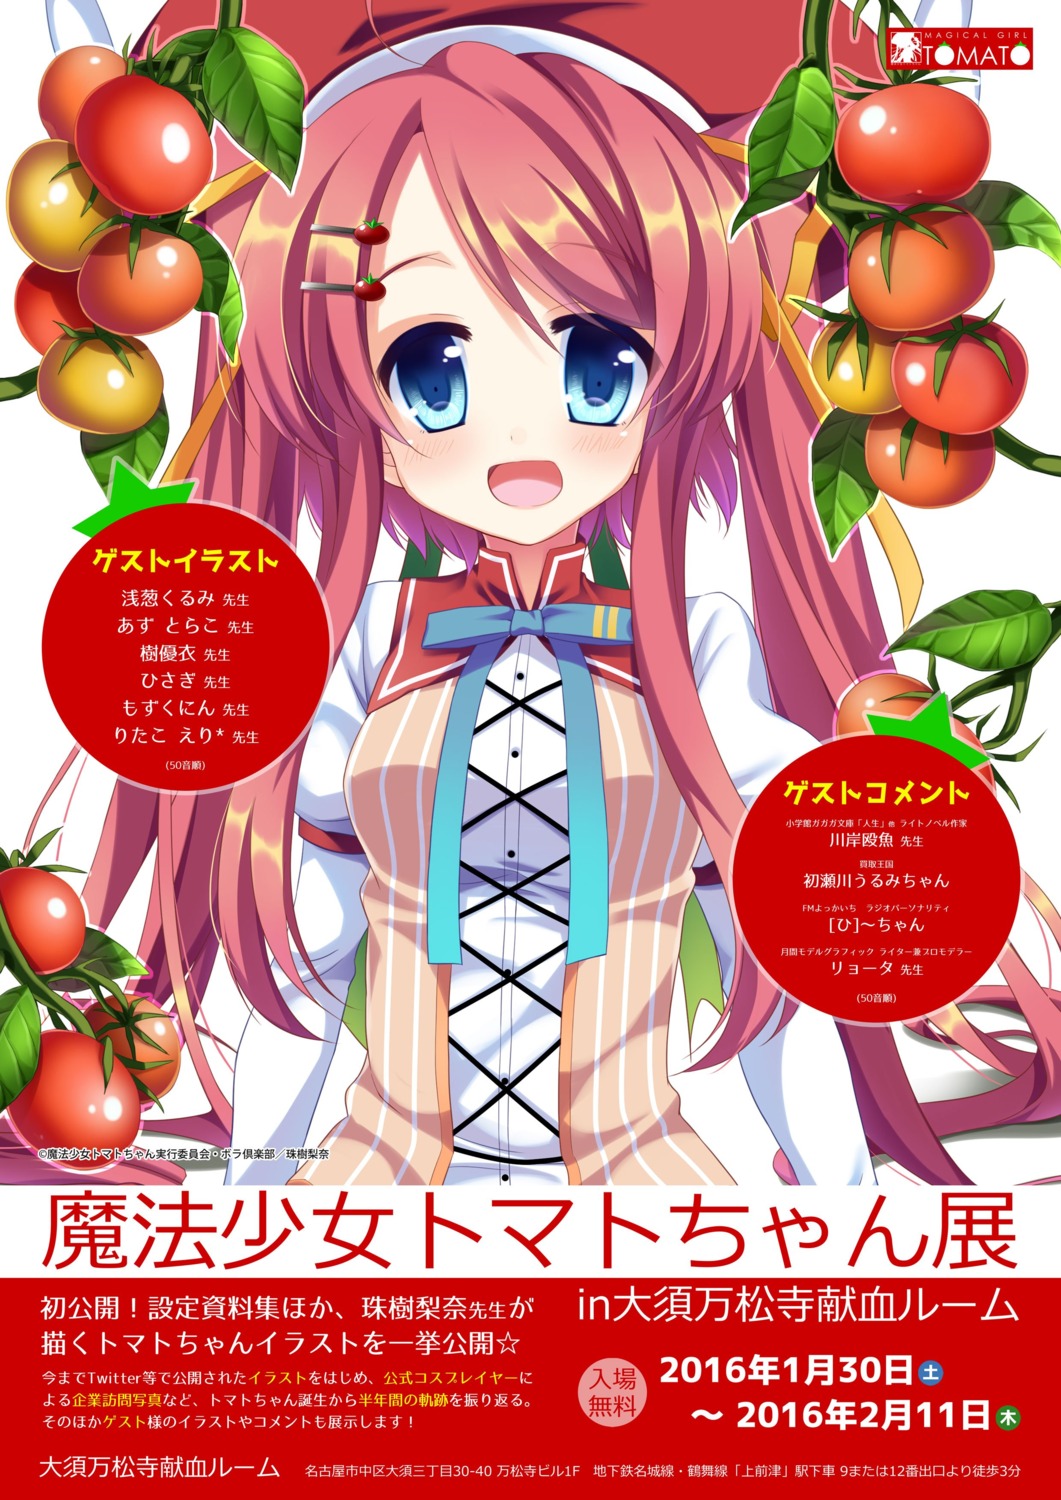 mahou_shoujo_tomato-chan misaki_tomato tamaki_rina